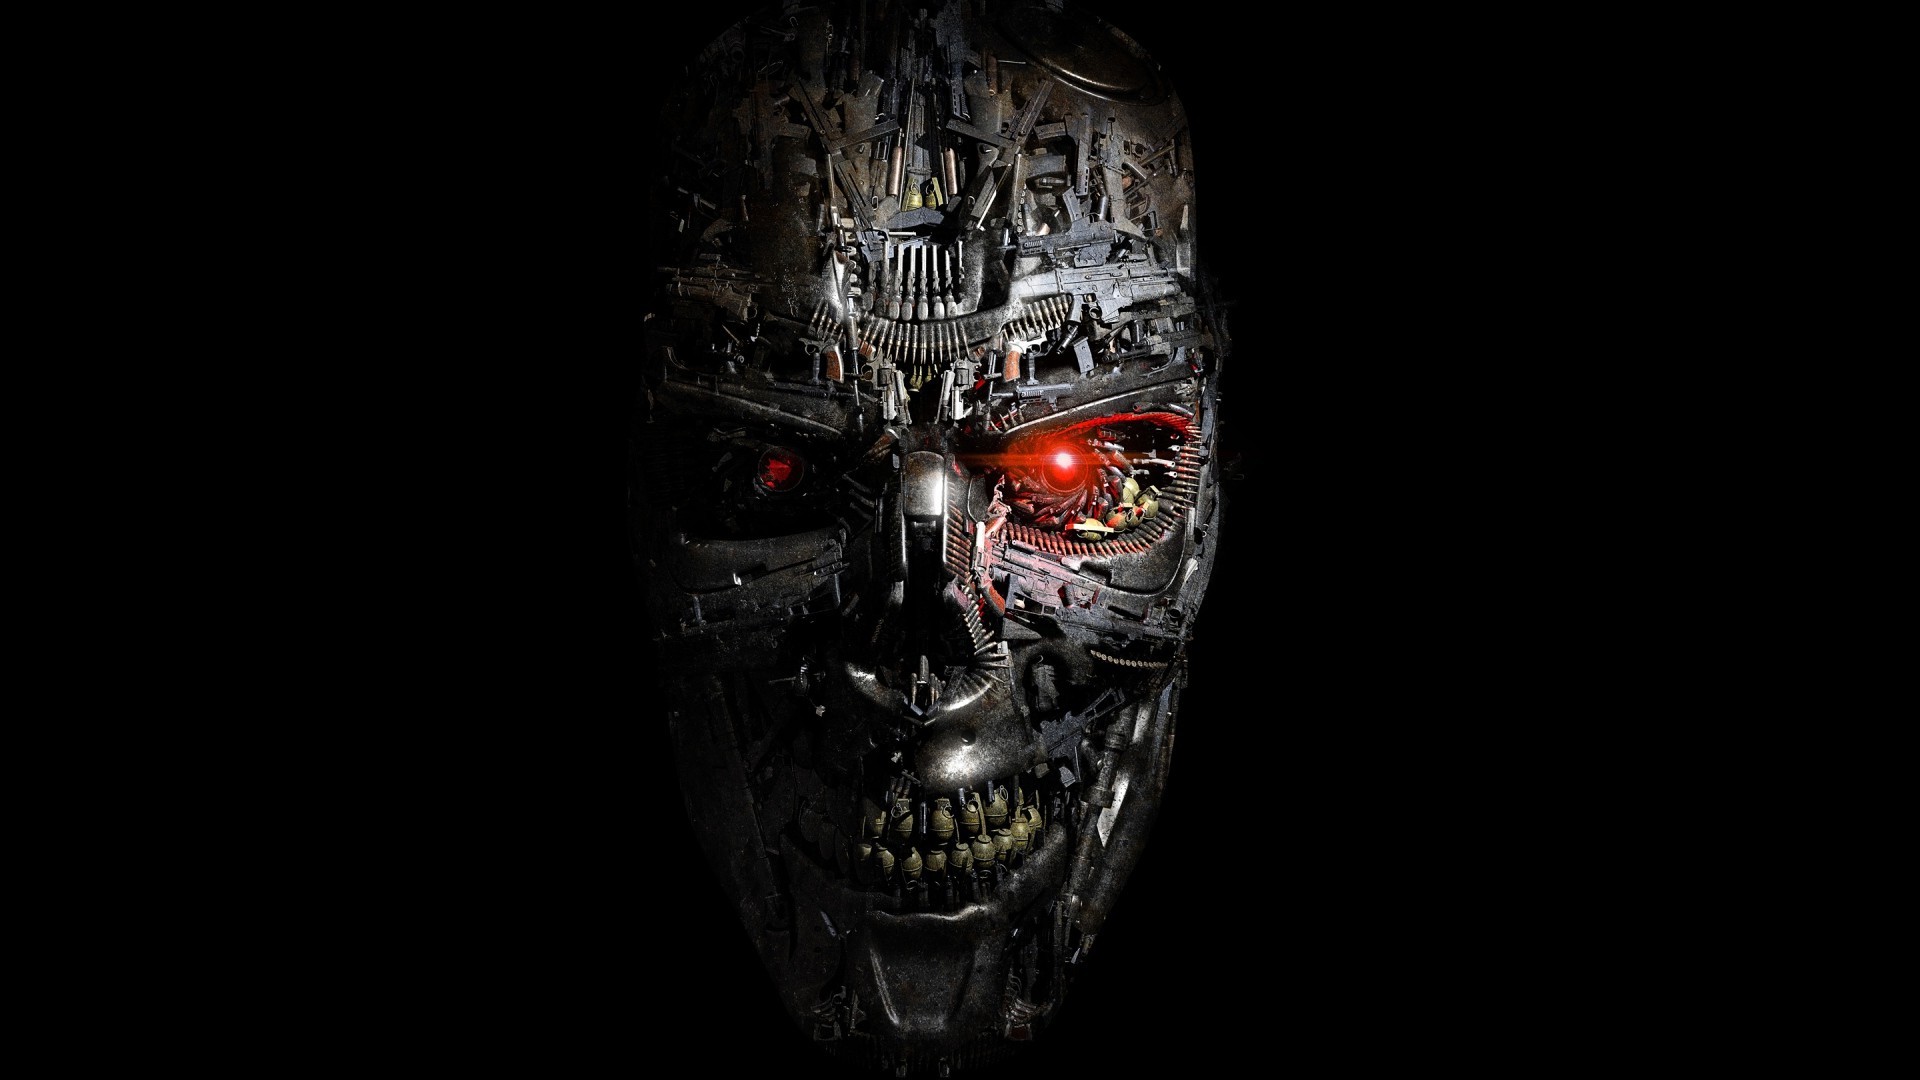 Terminator Genisys, Robot, Cyborg, Face, Red Eyes, Science Fiction, Black Background, Metal, Teeth, Gears, Steel, Digital Art, CGI, Artwork, Skull, Terminator, Machine, T 1000 Wallpaper